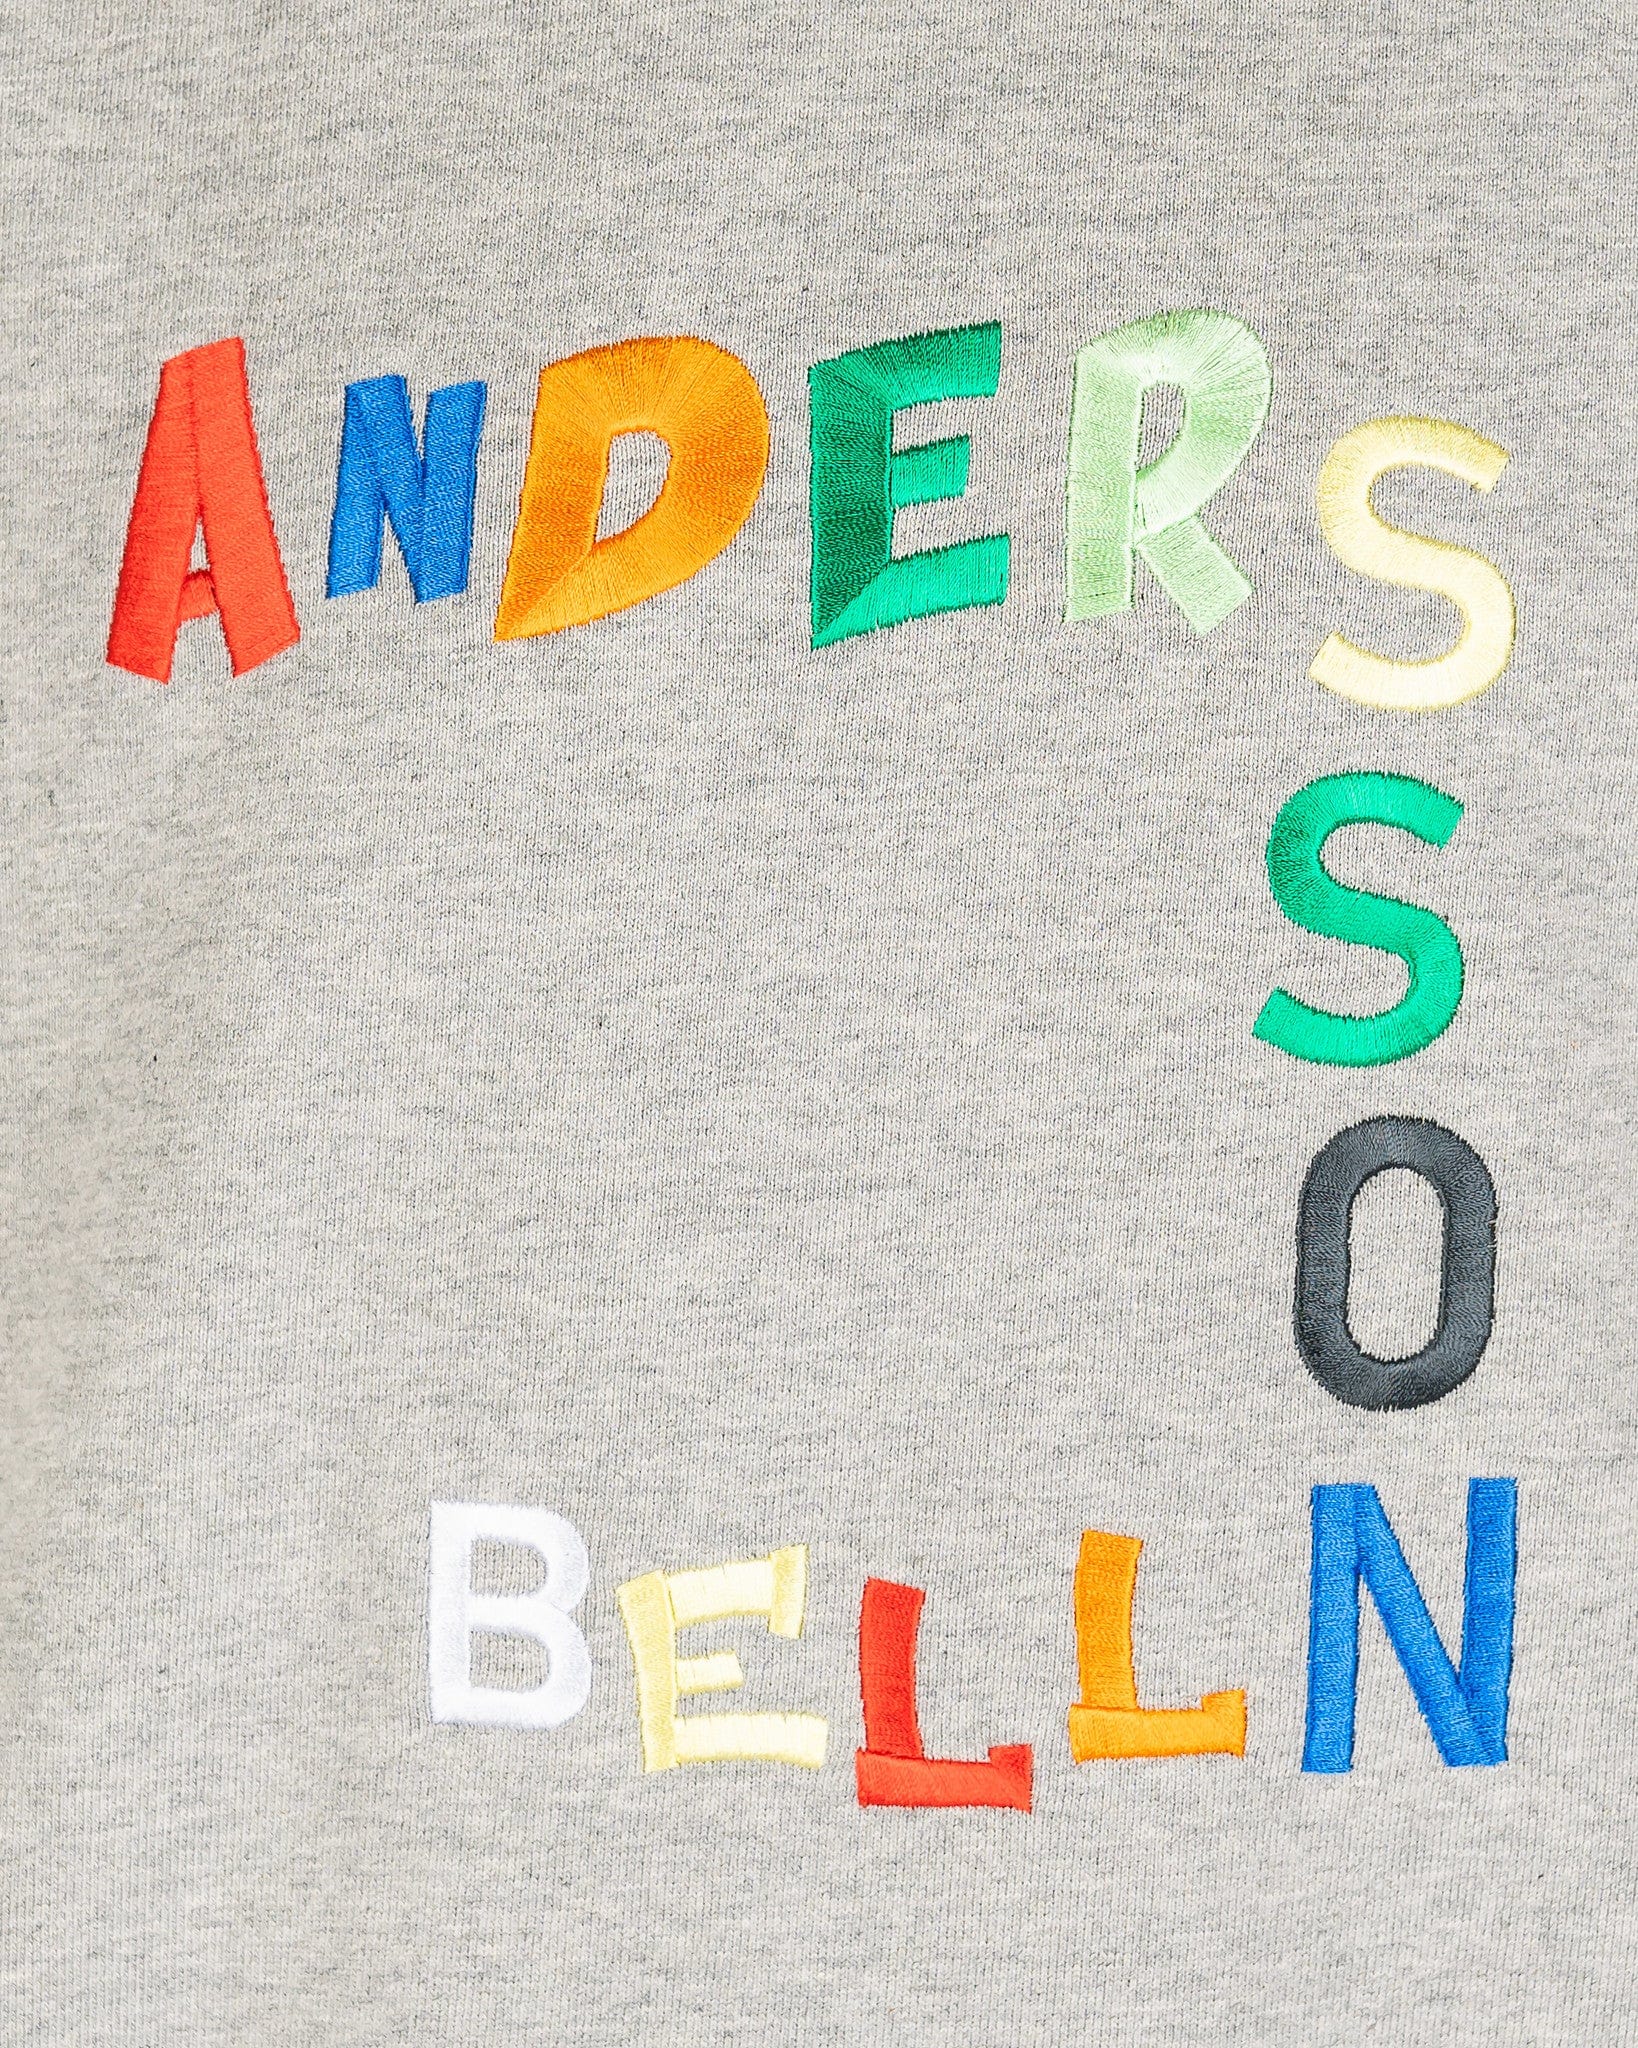 Andersson Bell Men's Sweatshirts Embroidery Sweatshirt in Grey